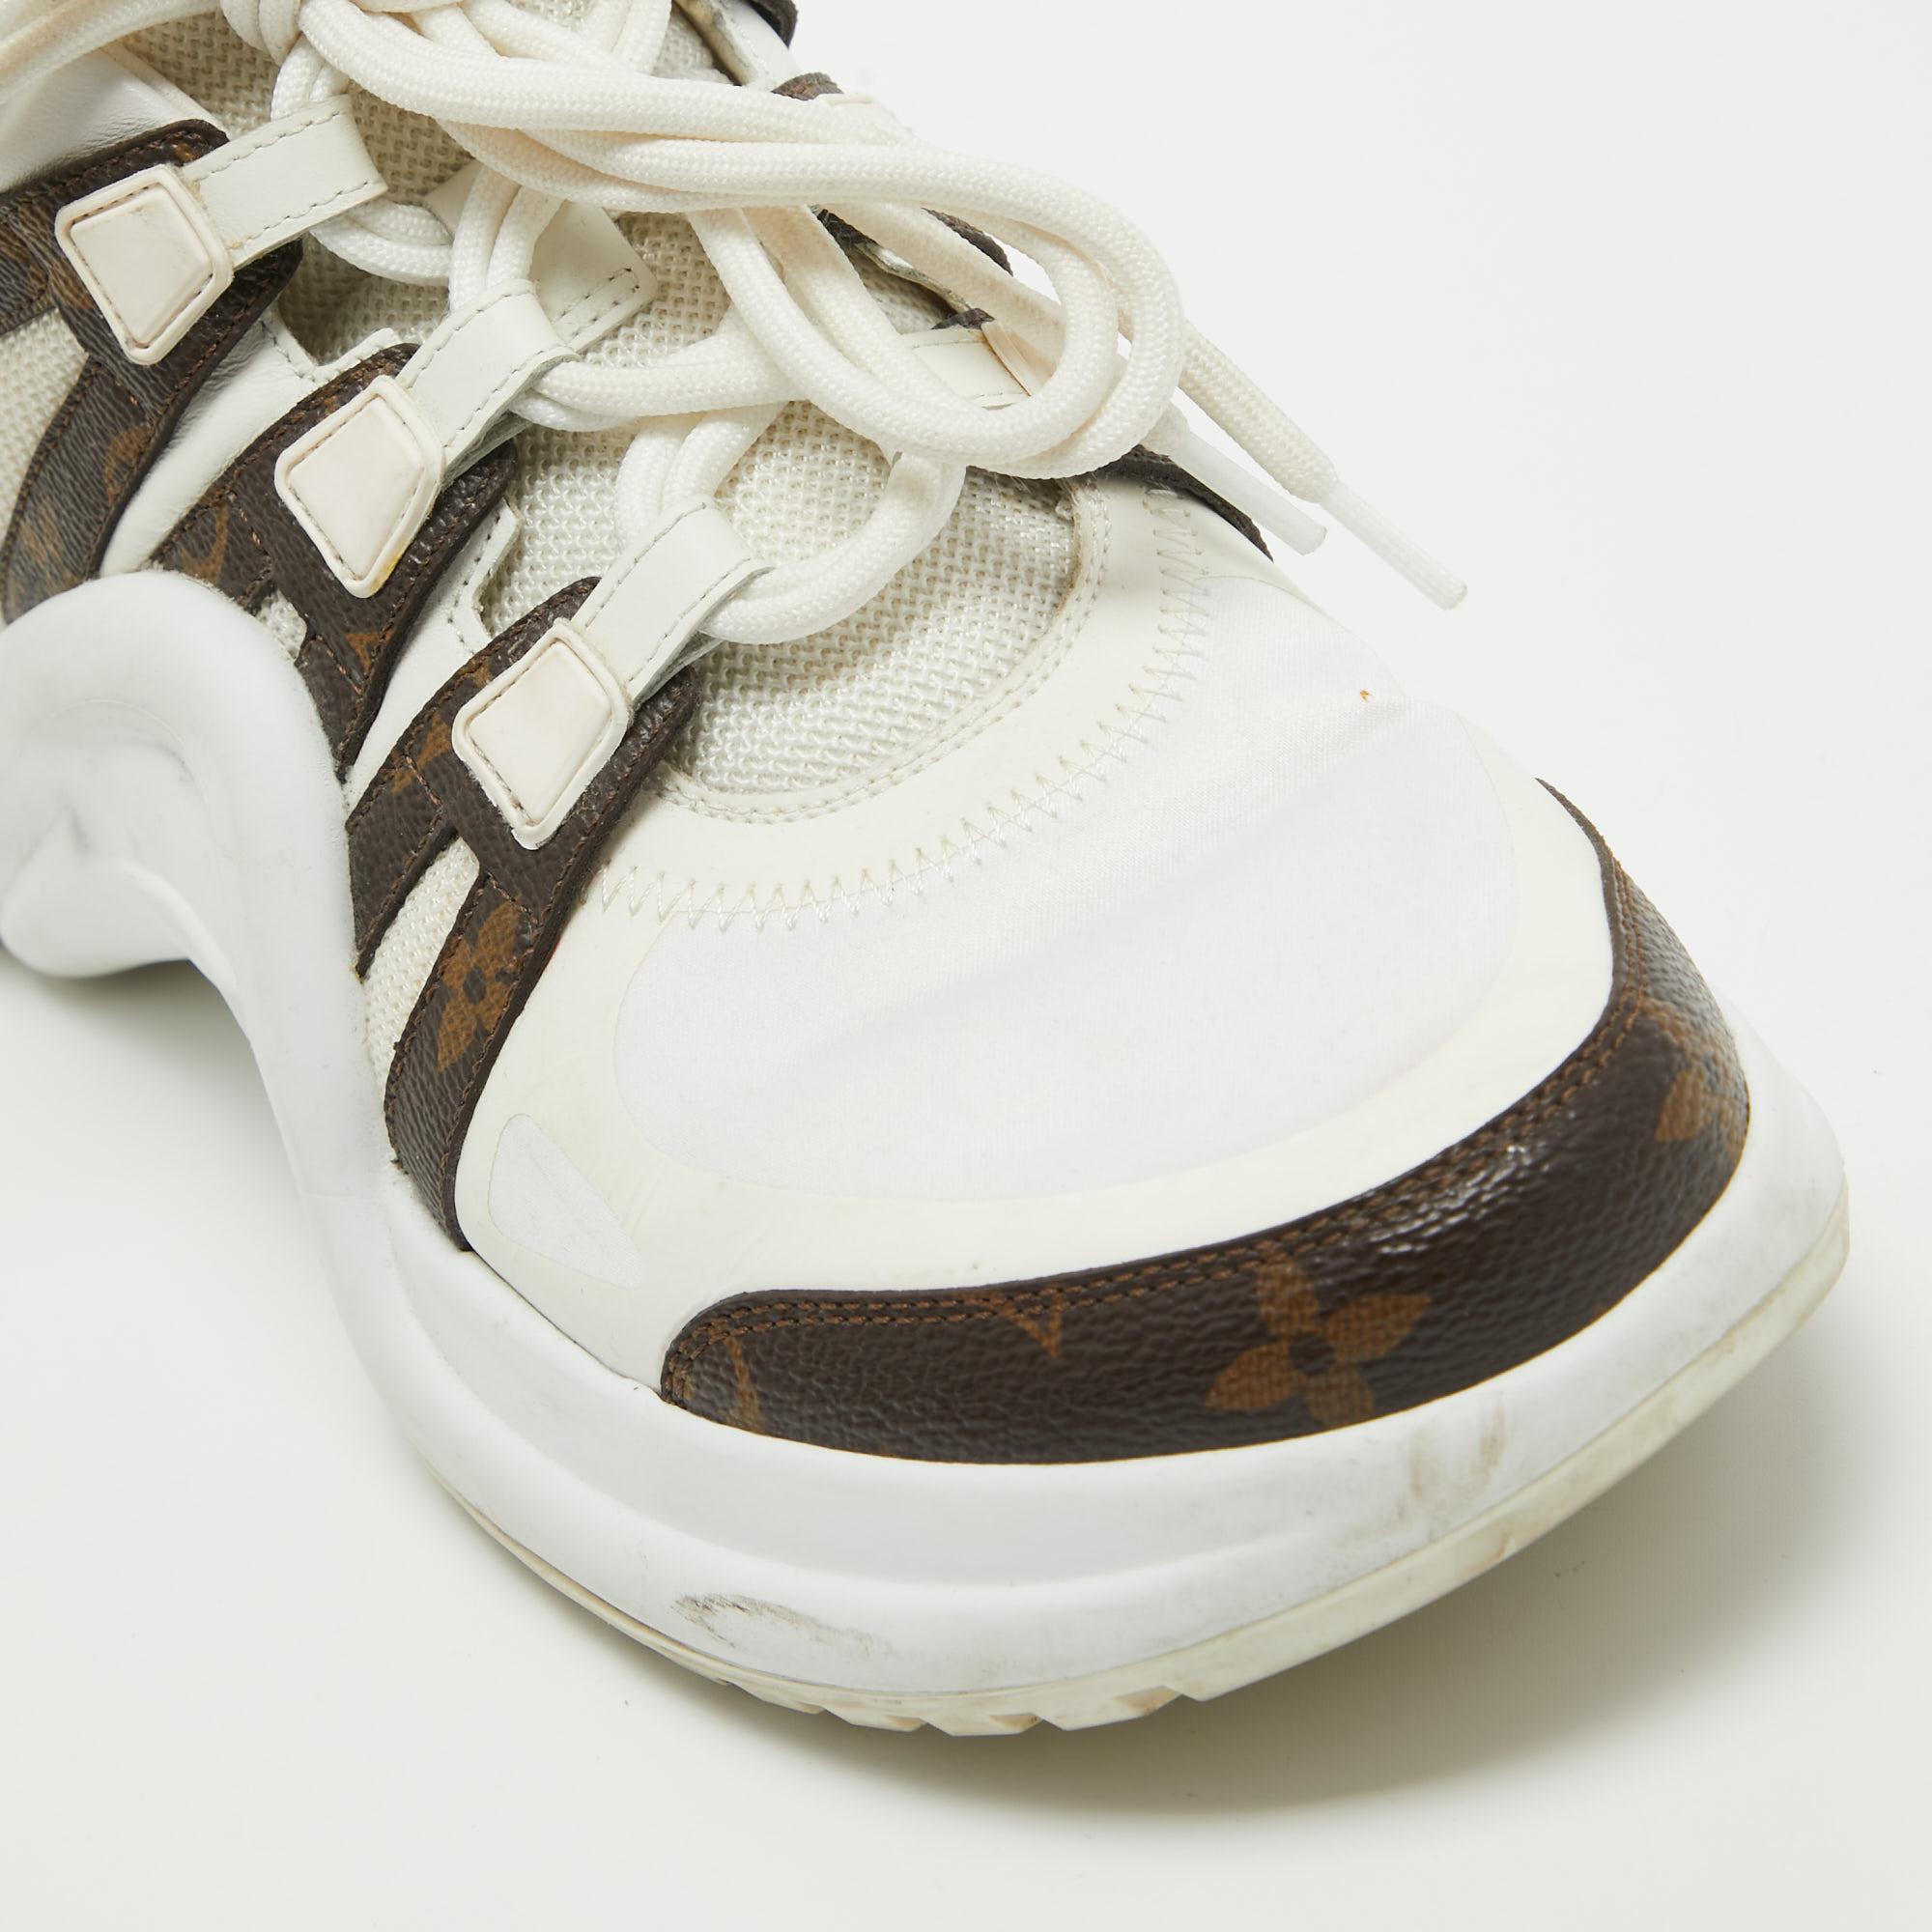 Women's Louis Vuitton White/Brown Nylon and Monogram Canvas Archlight Sneakers Size 41